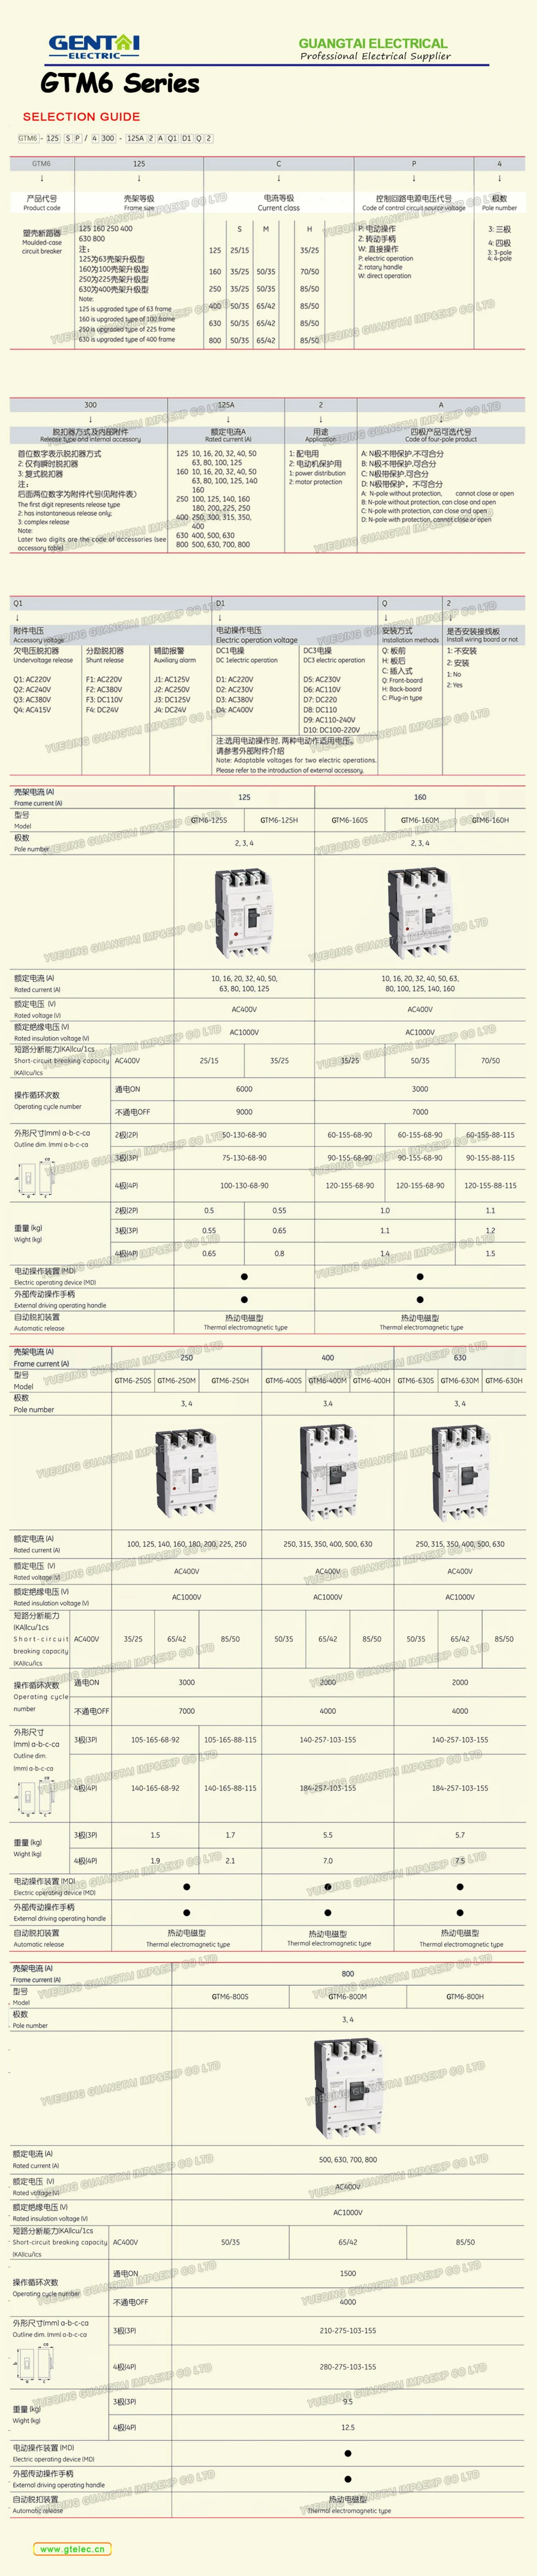 Gtelec Premium Gtm6rt 3p 4p 160A 250A MCCB Thermomagnetic Adjustable Type Moulded Case Circuit Breaker